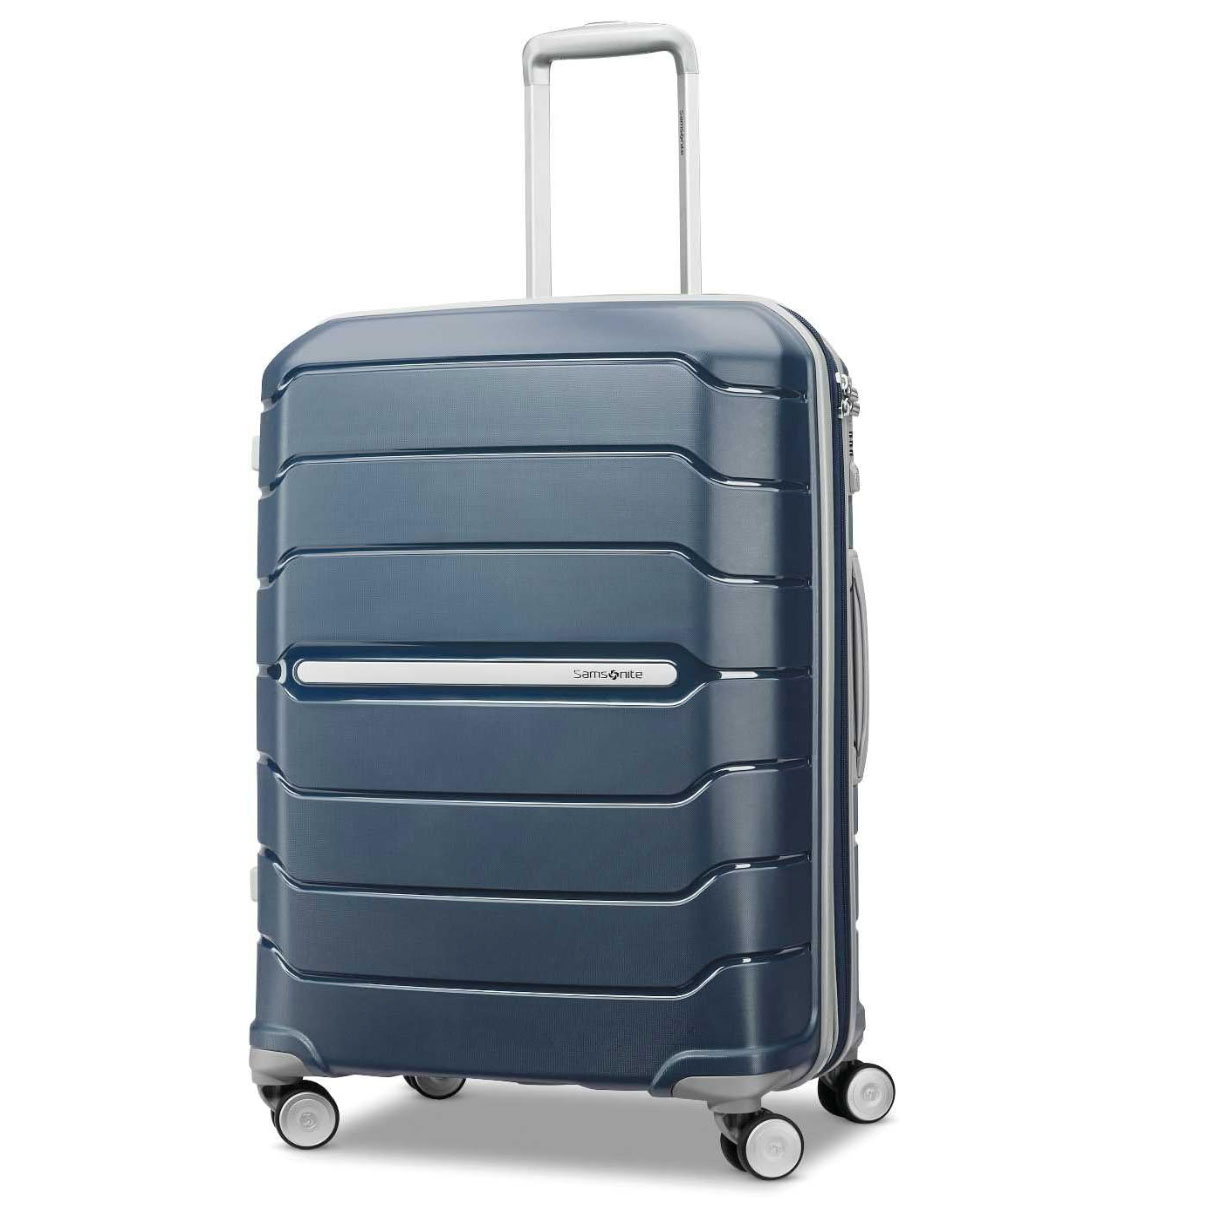 Samsonite hardside carry-on luggage in grey-blue